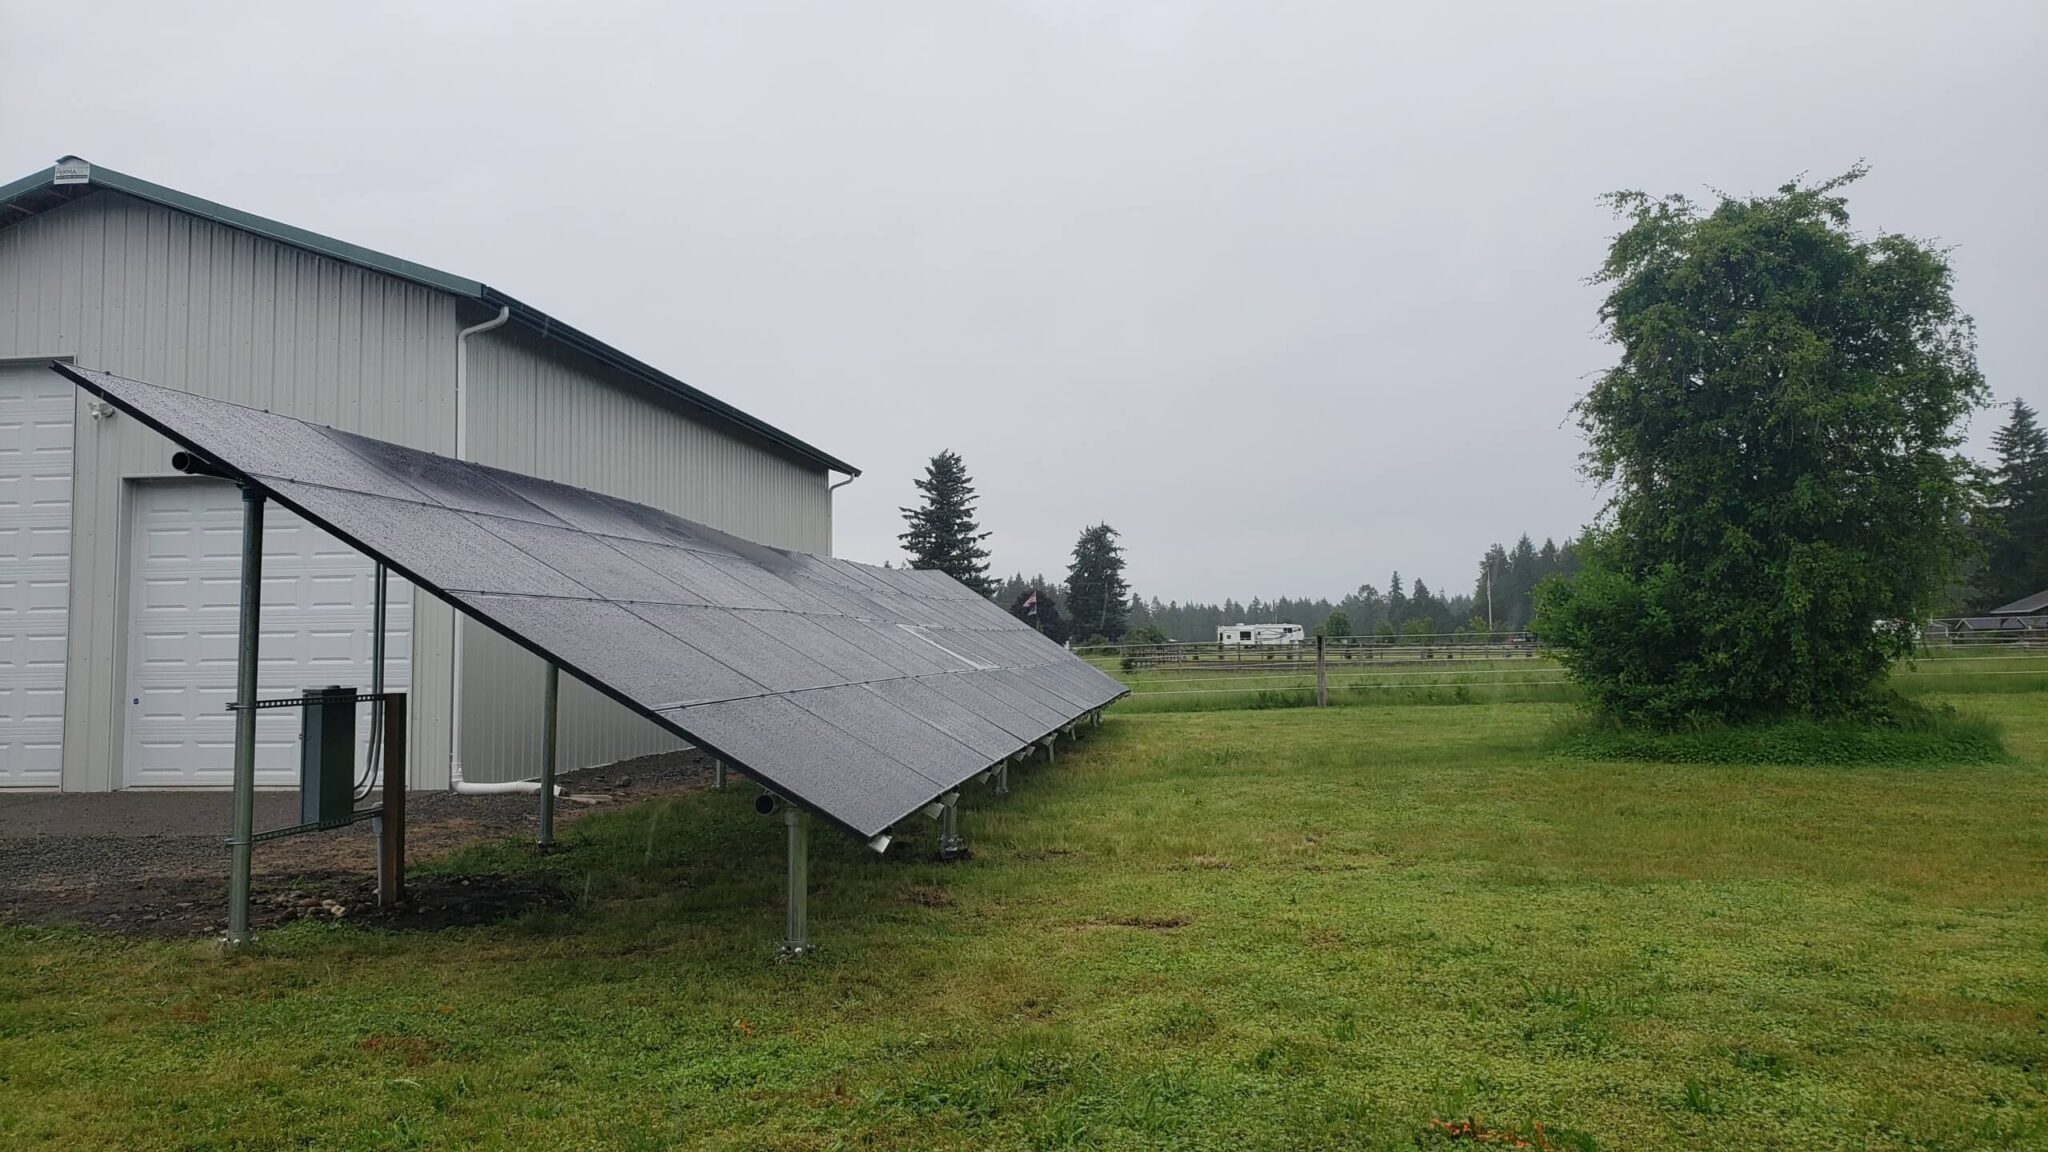 Ground-mount solar array next to barn